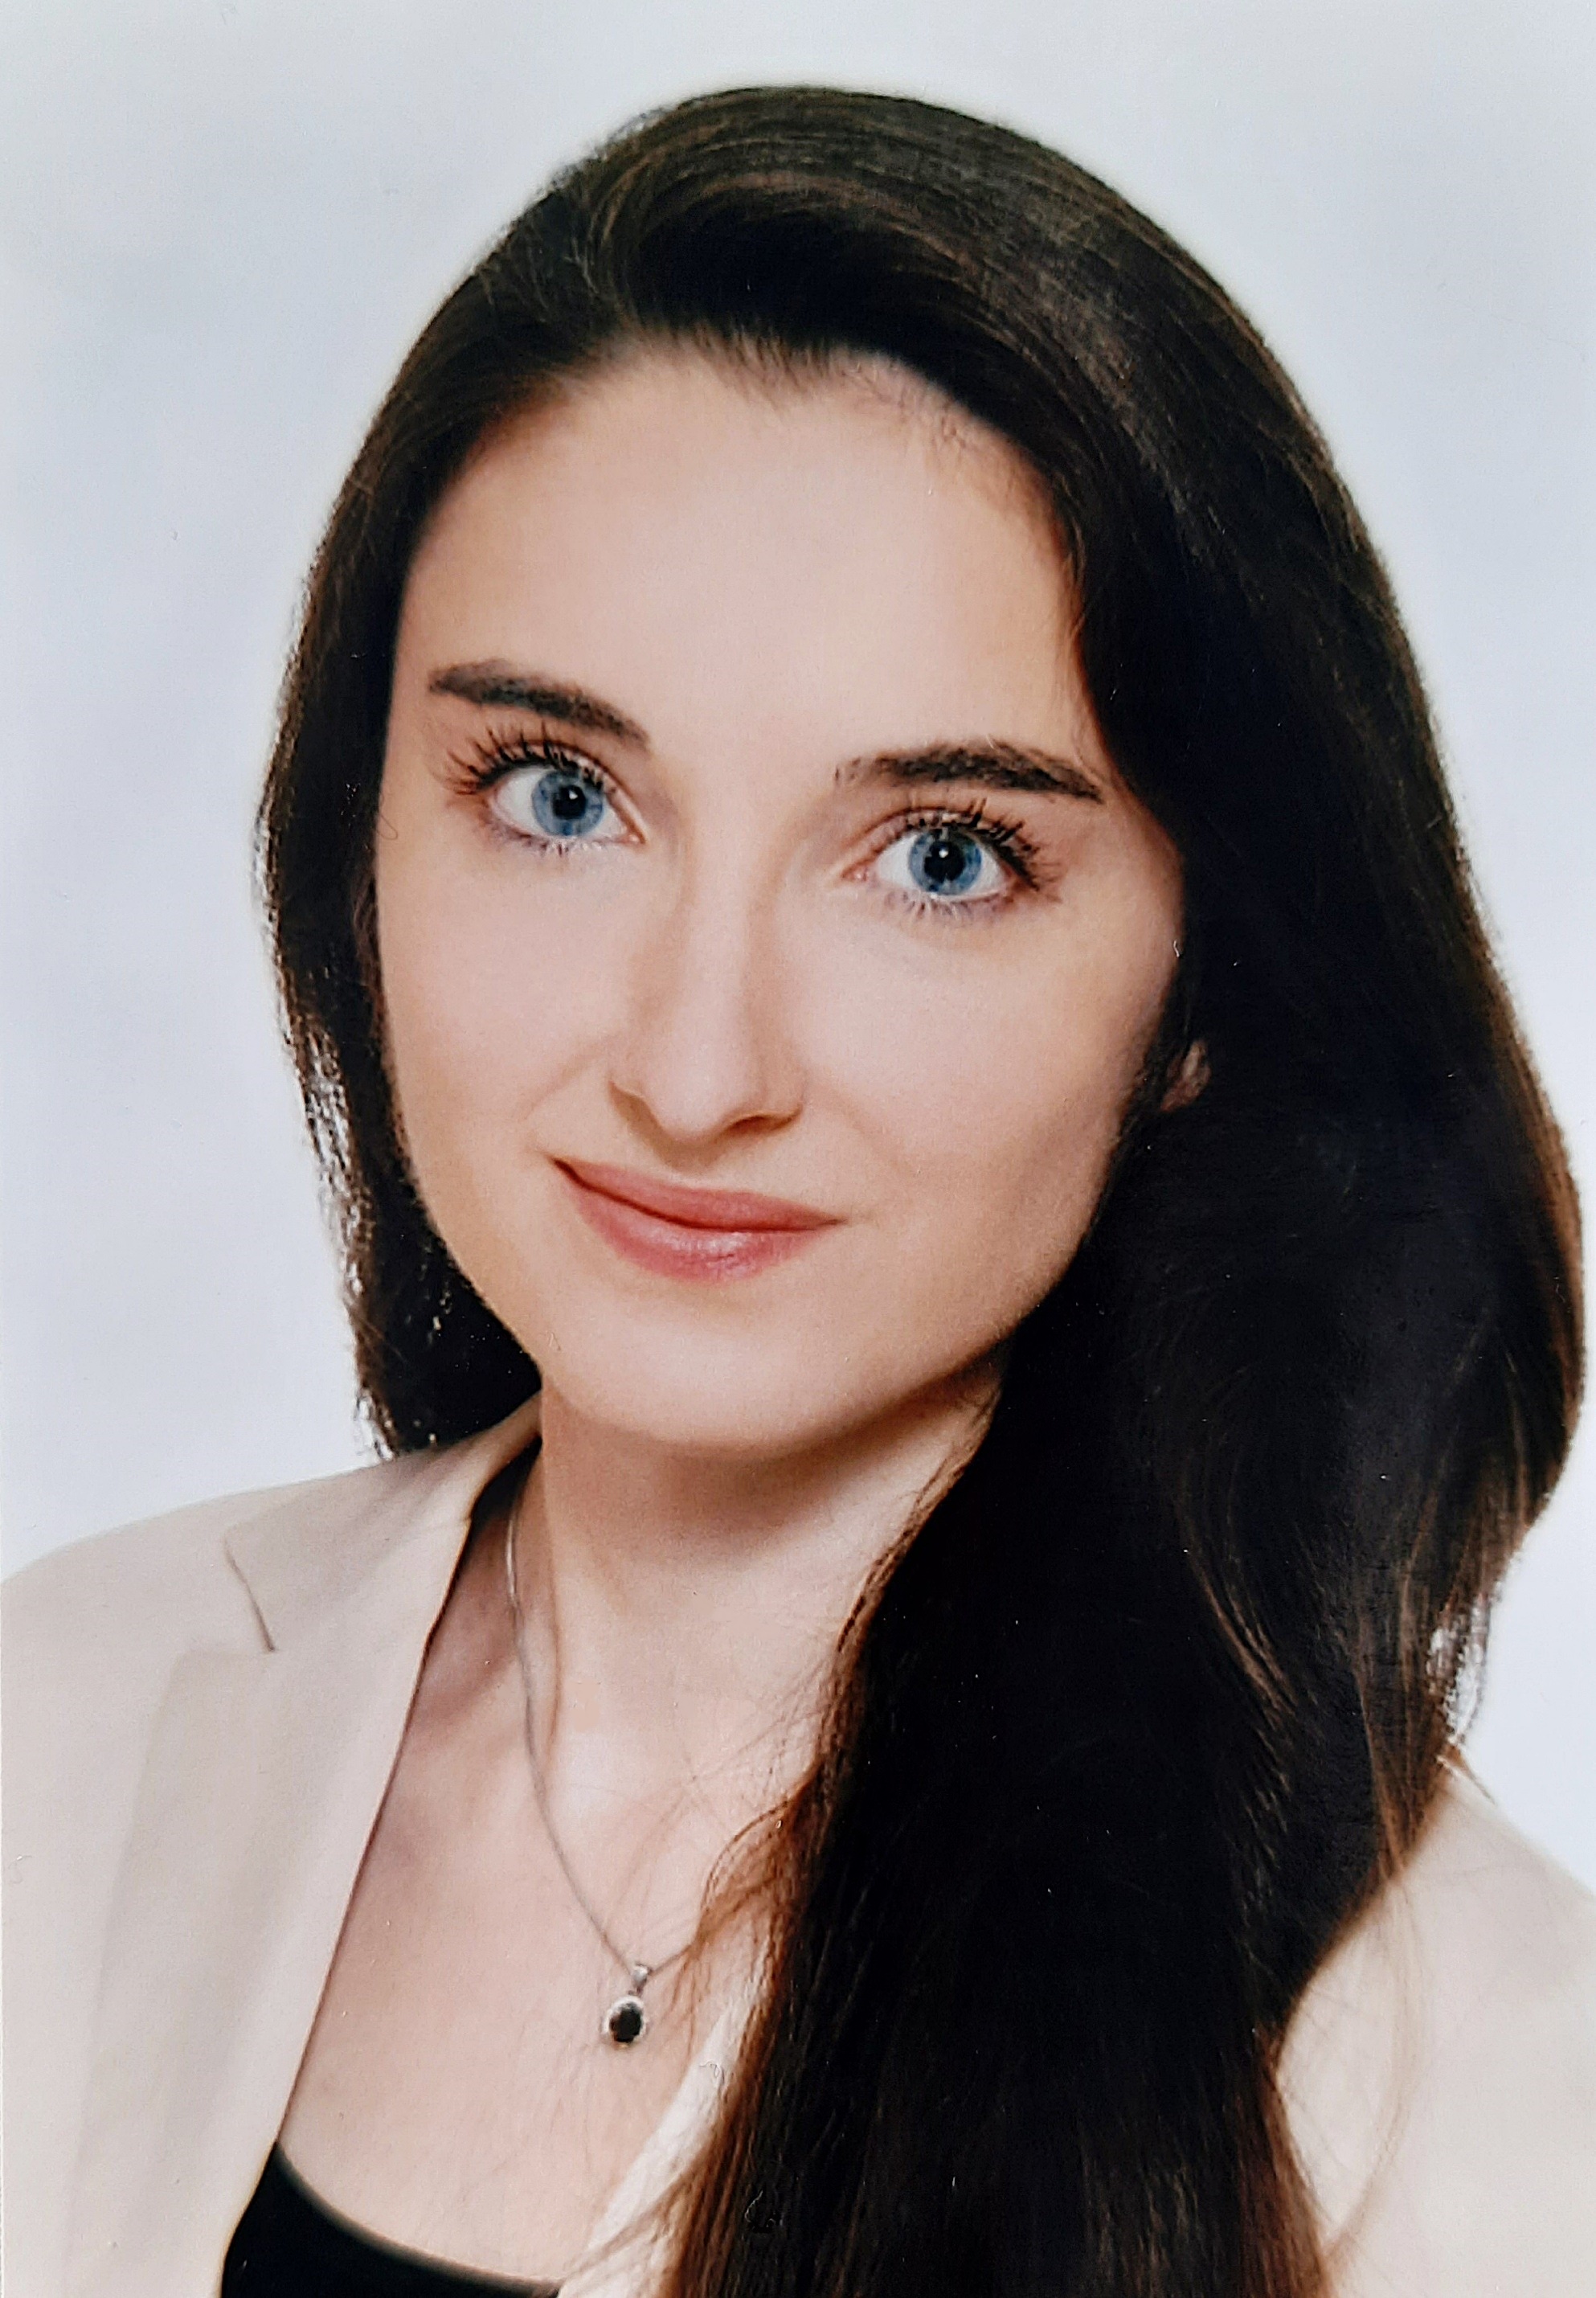 Agata Jankowicz